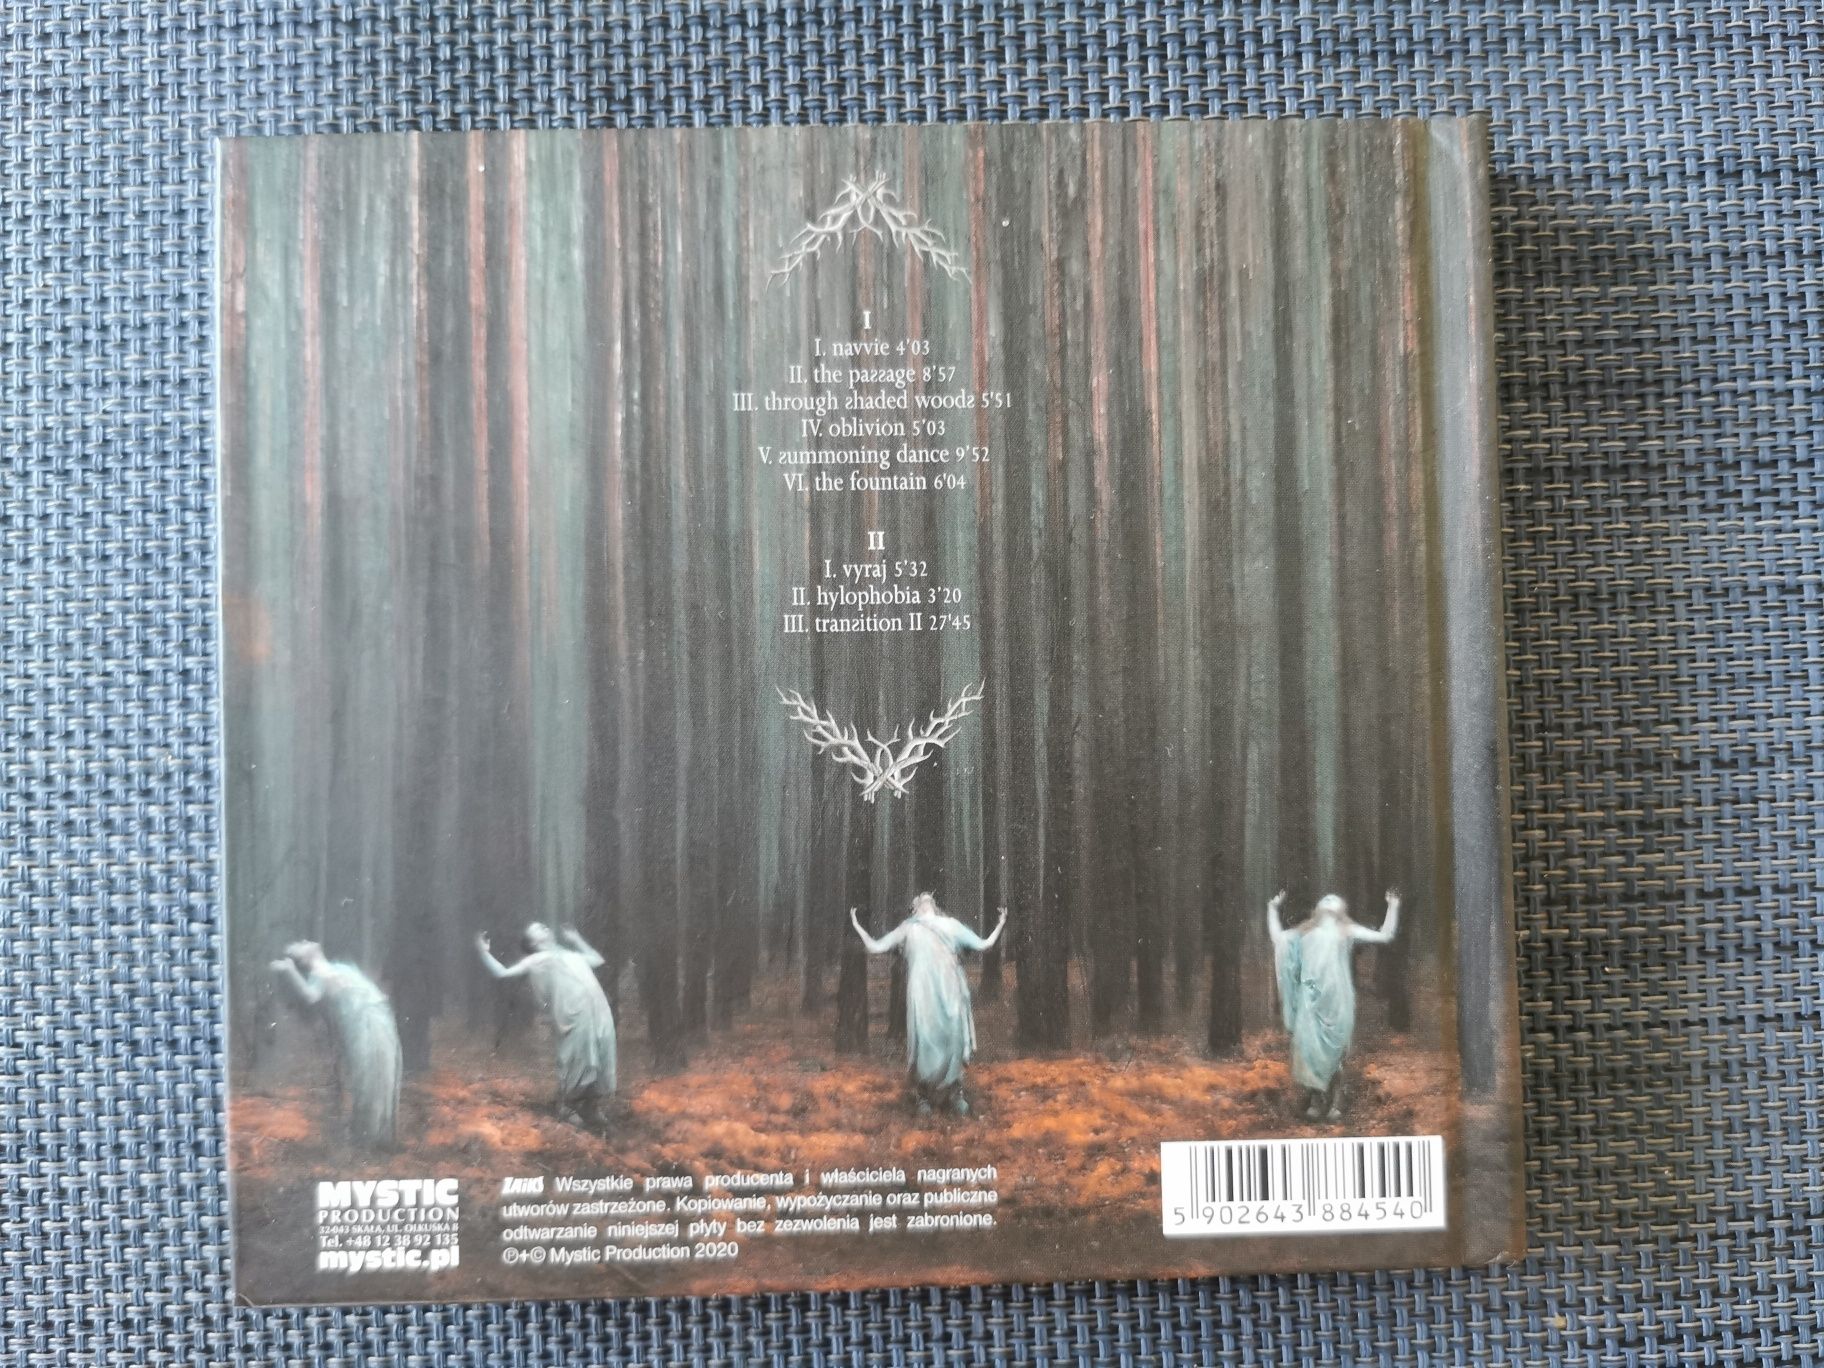 Lunatic Soul - " Through Shaded Woods" - 2 x CD